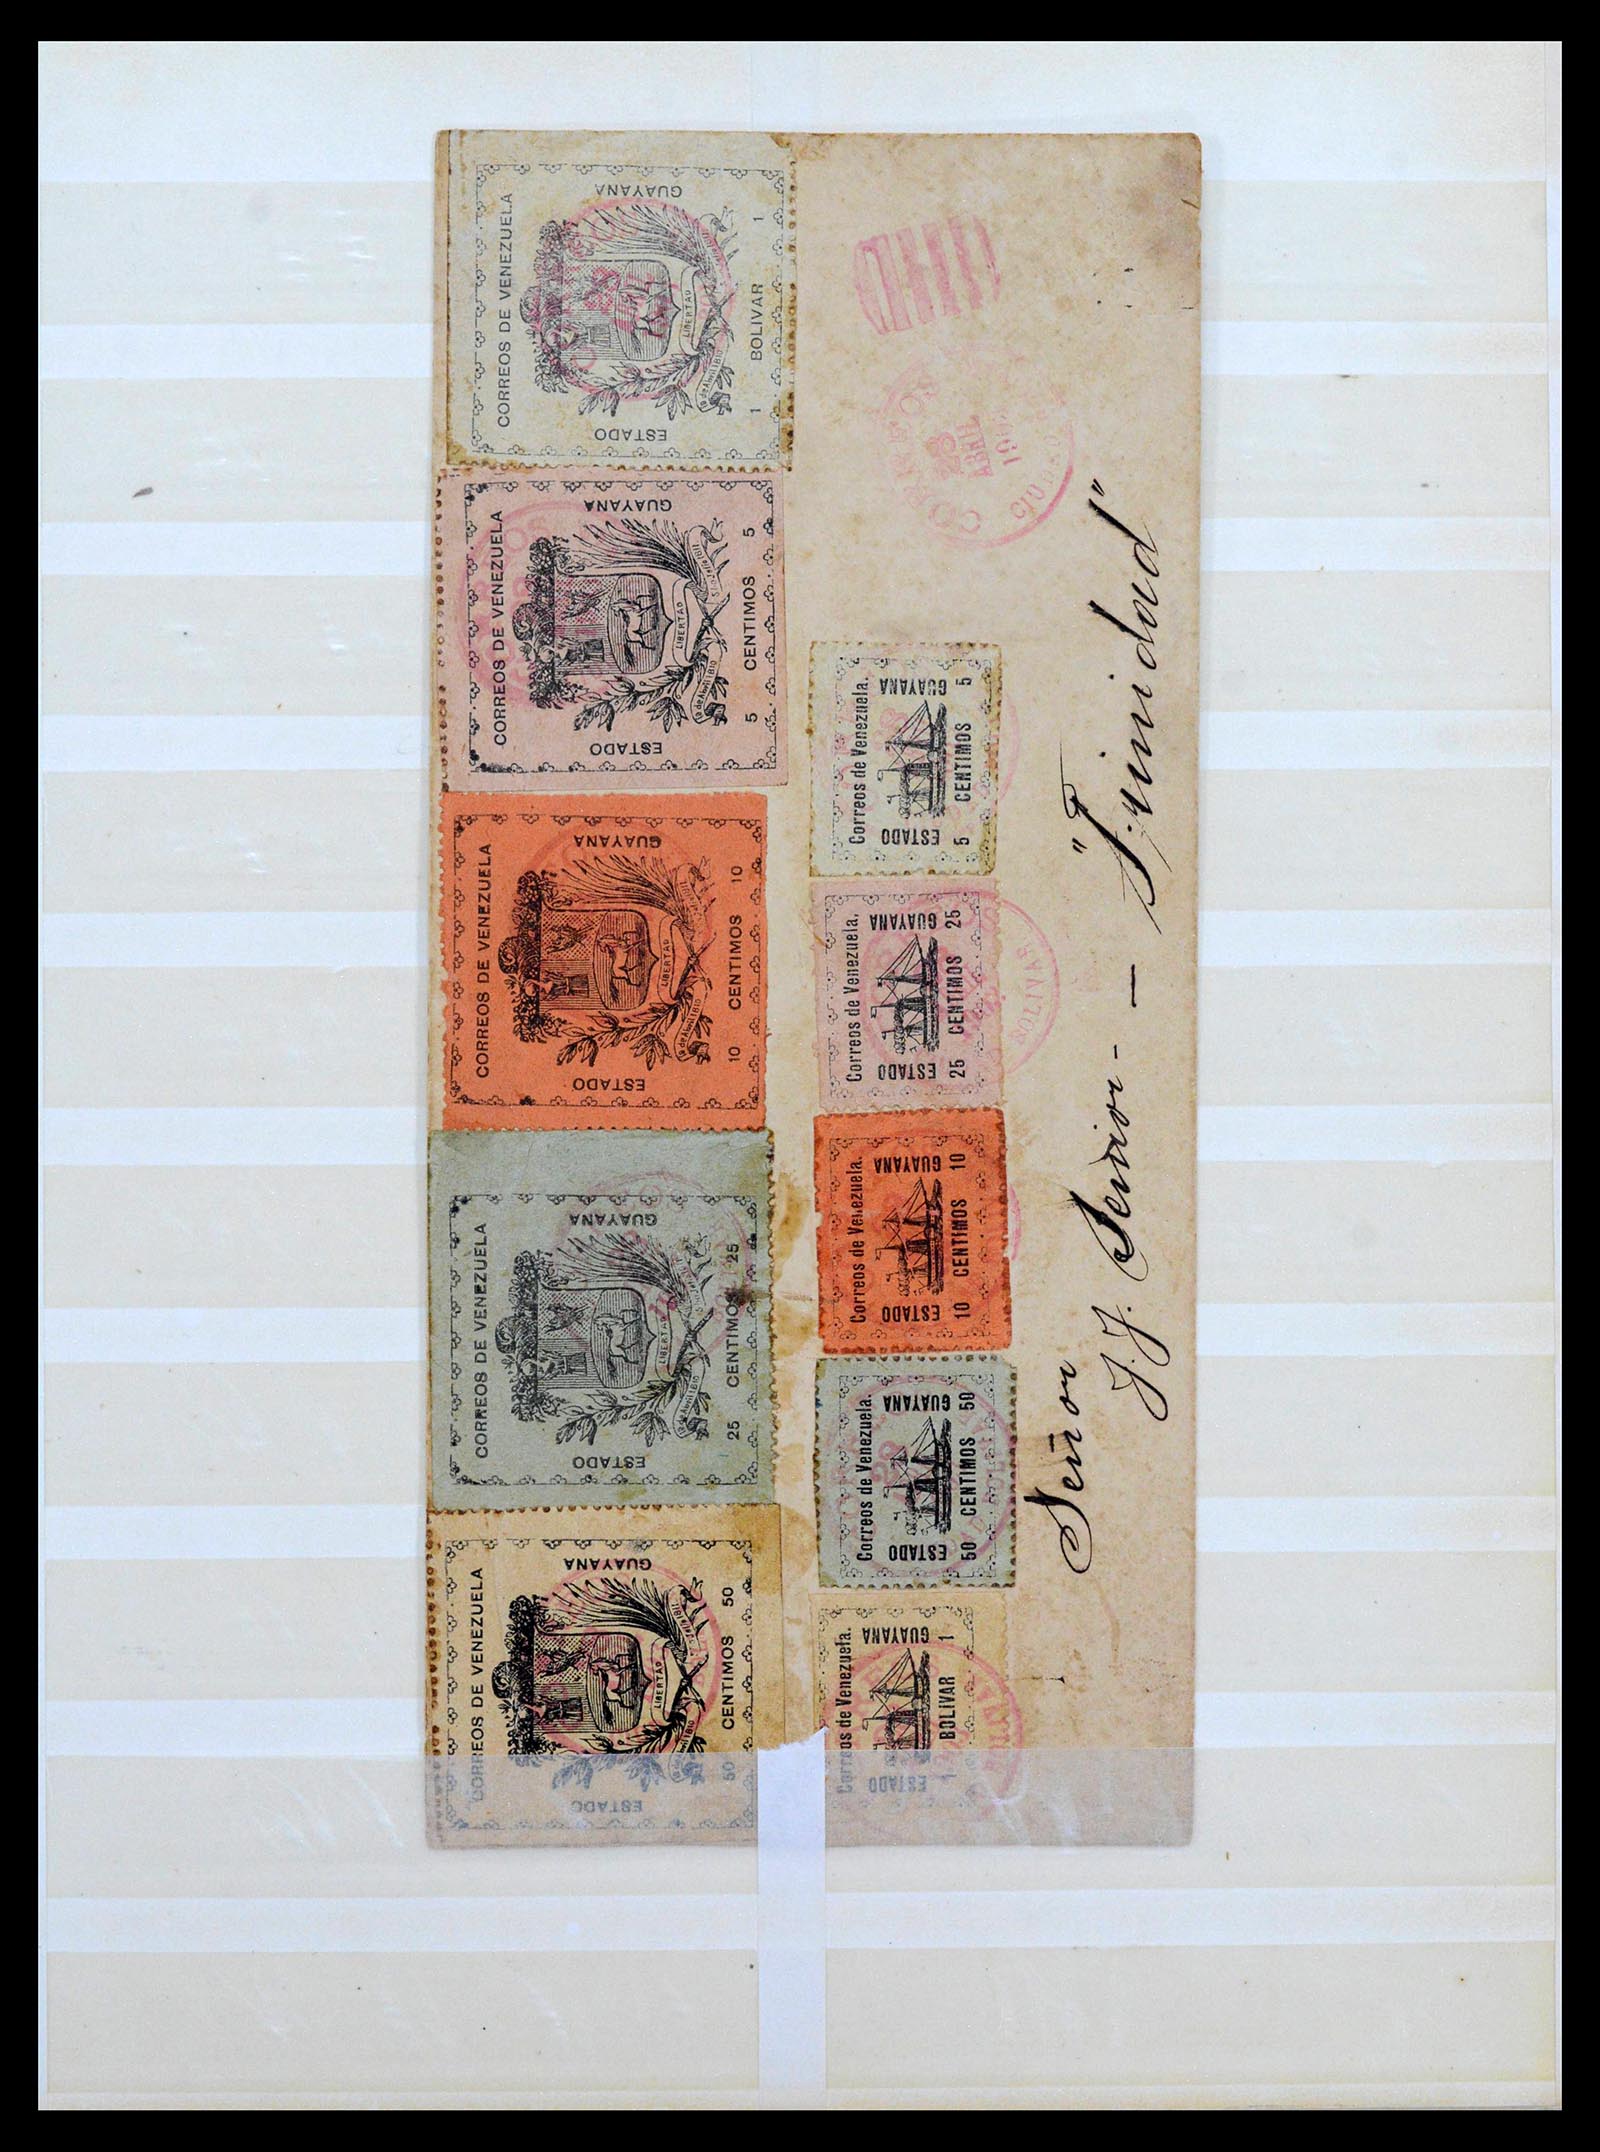 39436 0246 - Stamp collection 39436 Venezuela 1859-1985.